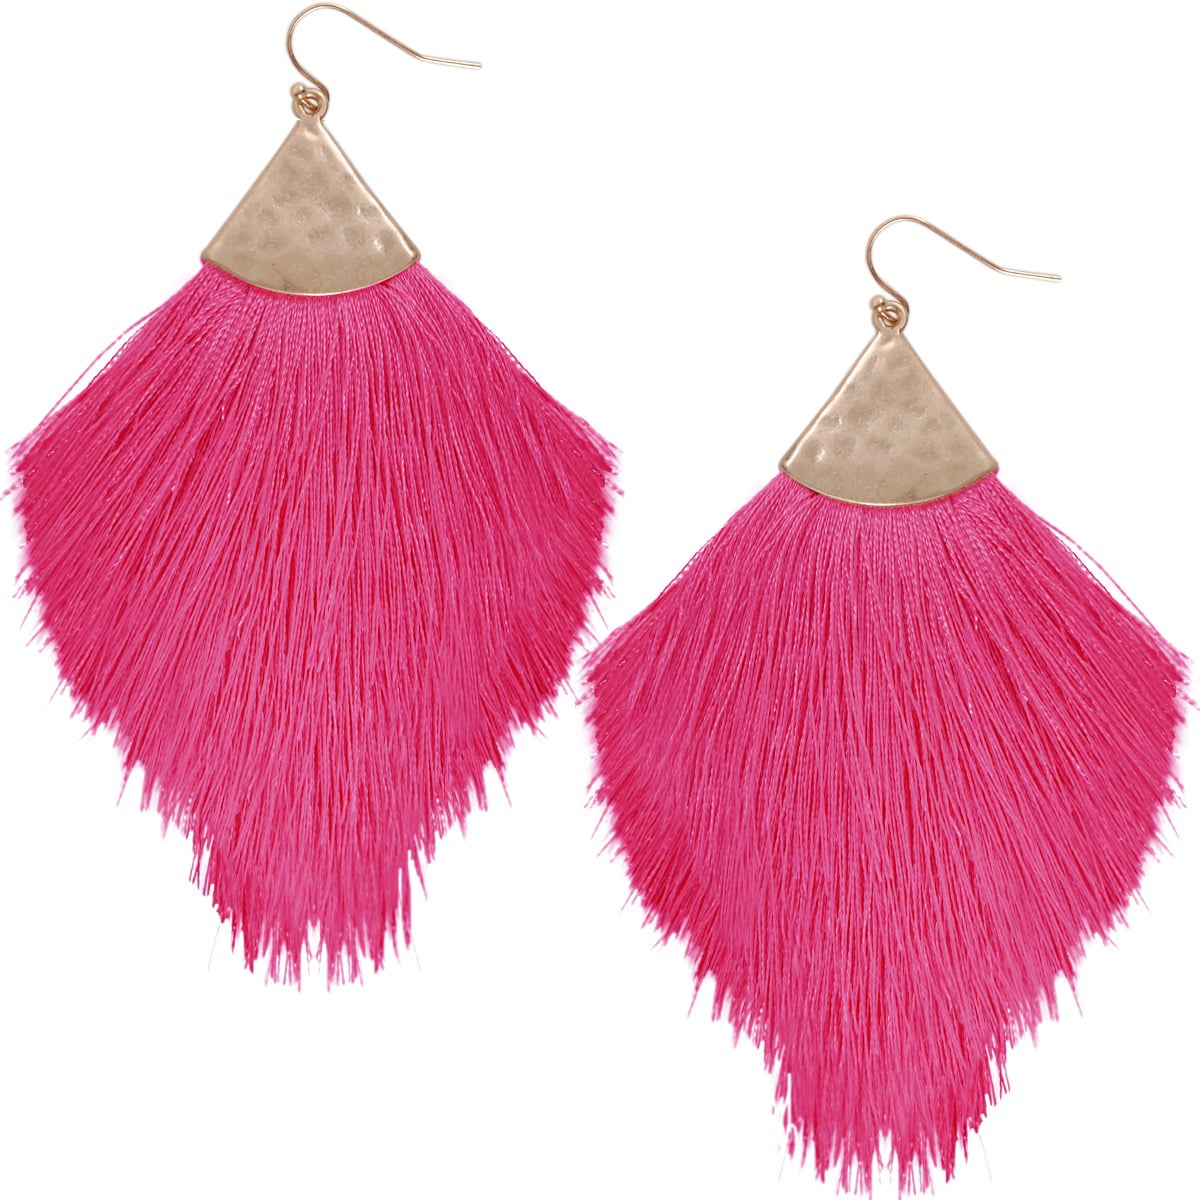 Hot pink yet slightly purplish .Bronze top stylish tassel earrings